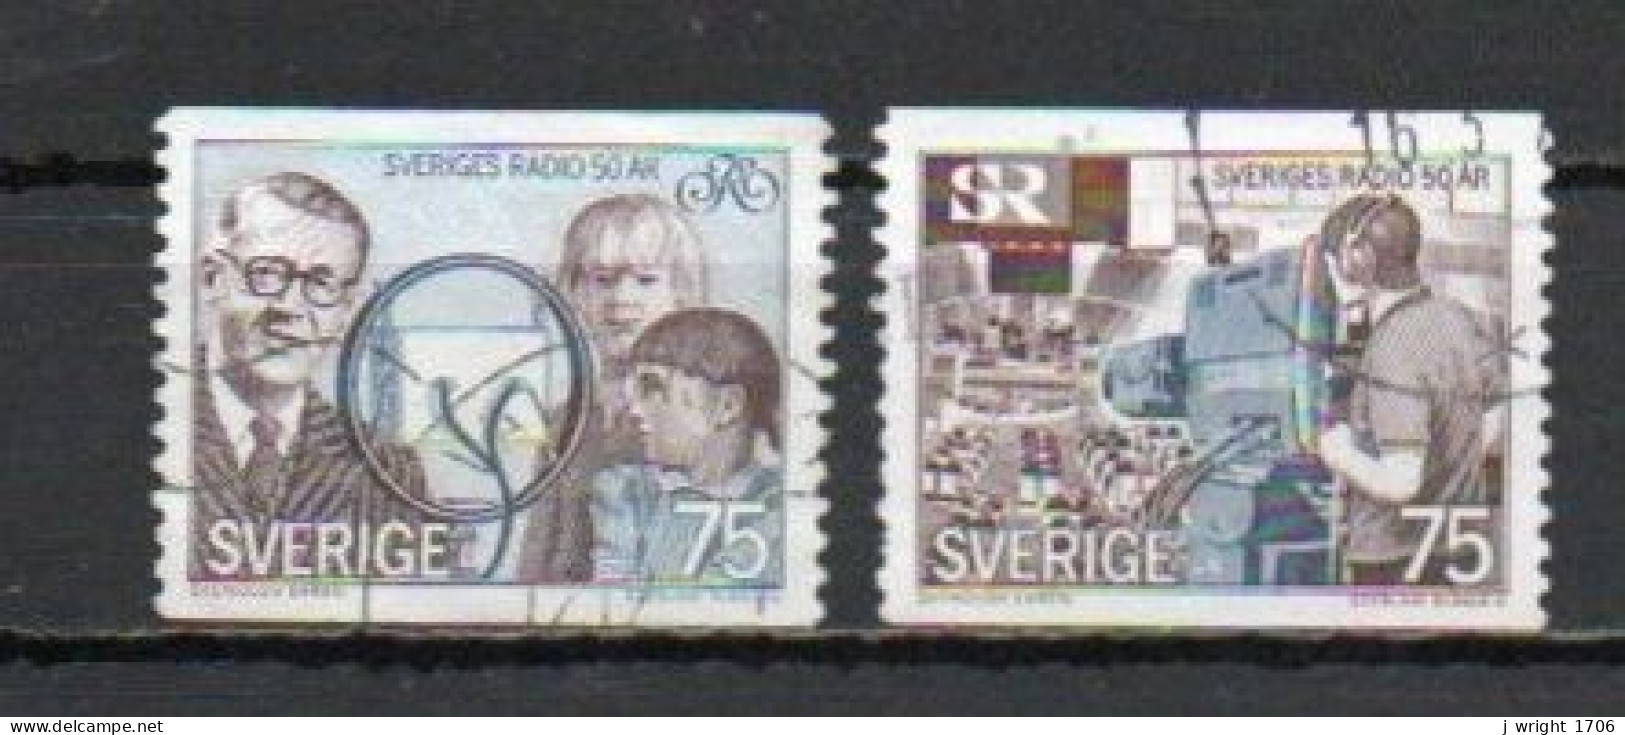 Sweden, 1974, Swedish Broadcasting Corporation, Set, USED - Used Stamps